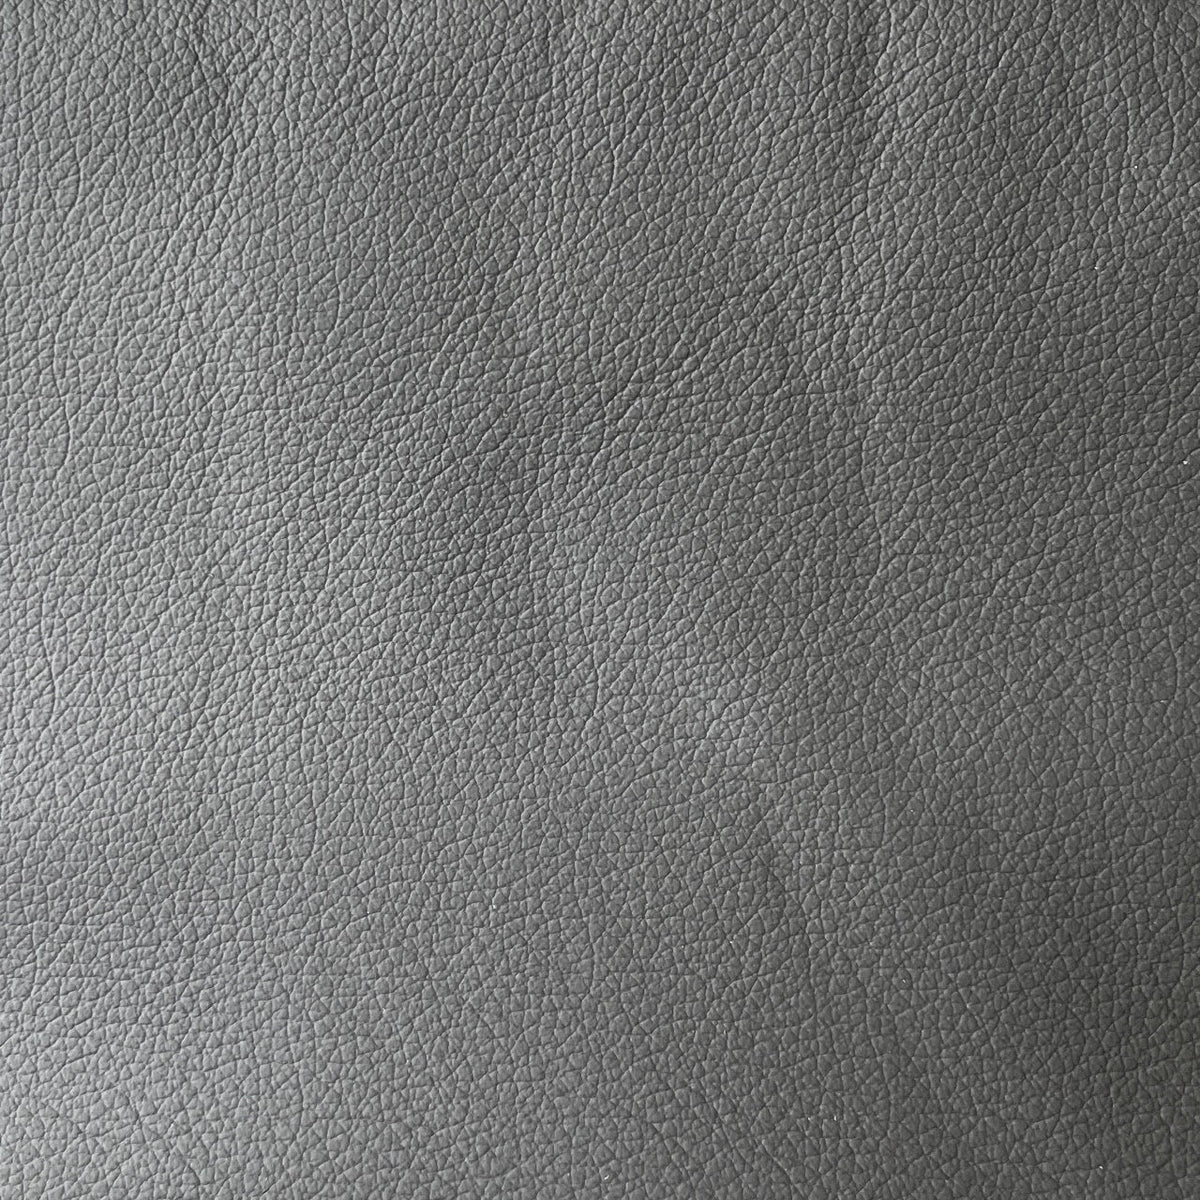 Upholstery Cow Hide #04b | Grey | 1.0/1.2mm | 58.66 sq.ft | $405 ea.